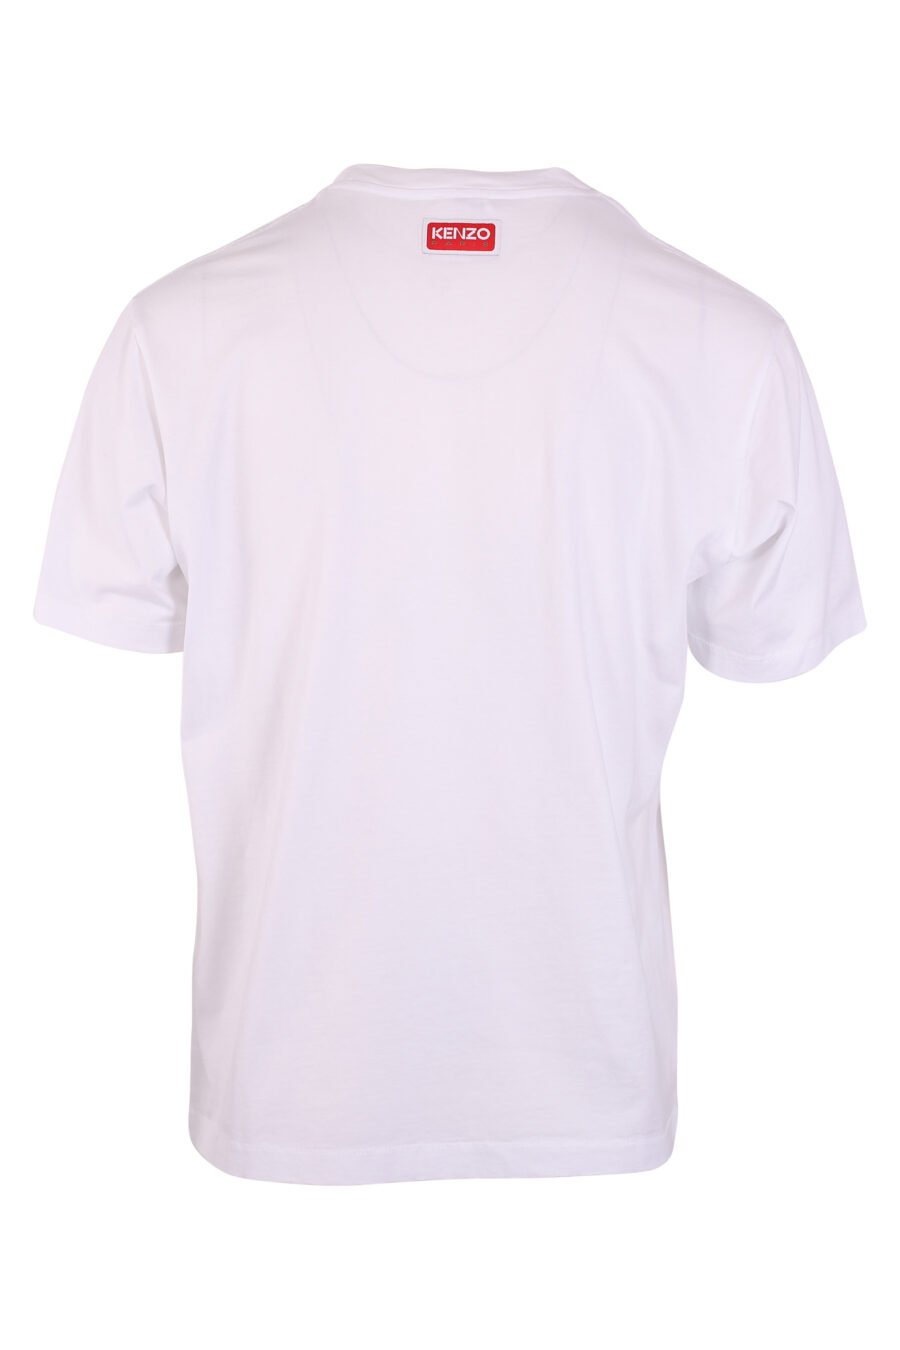 Camiseta blanca con logo "flower" - IMG 9468